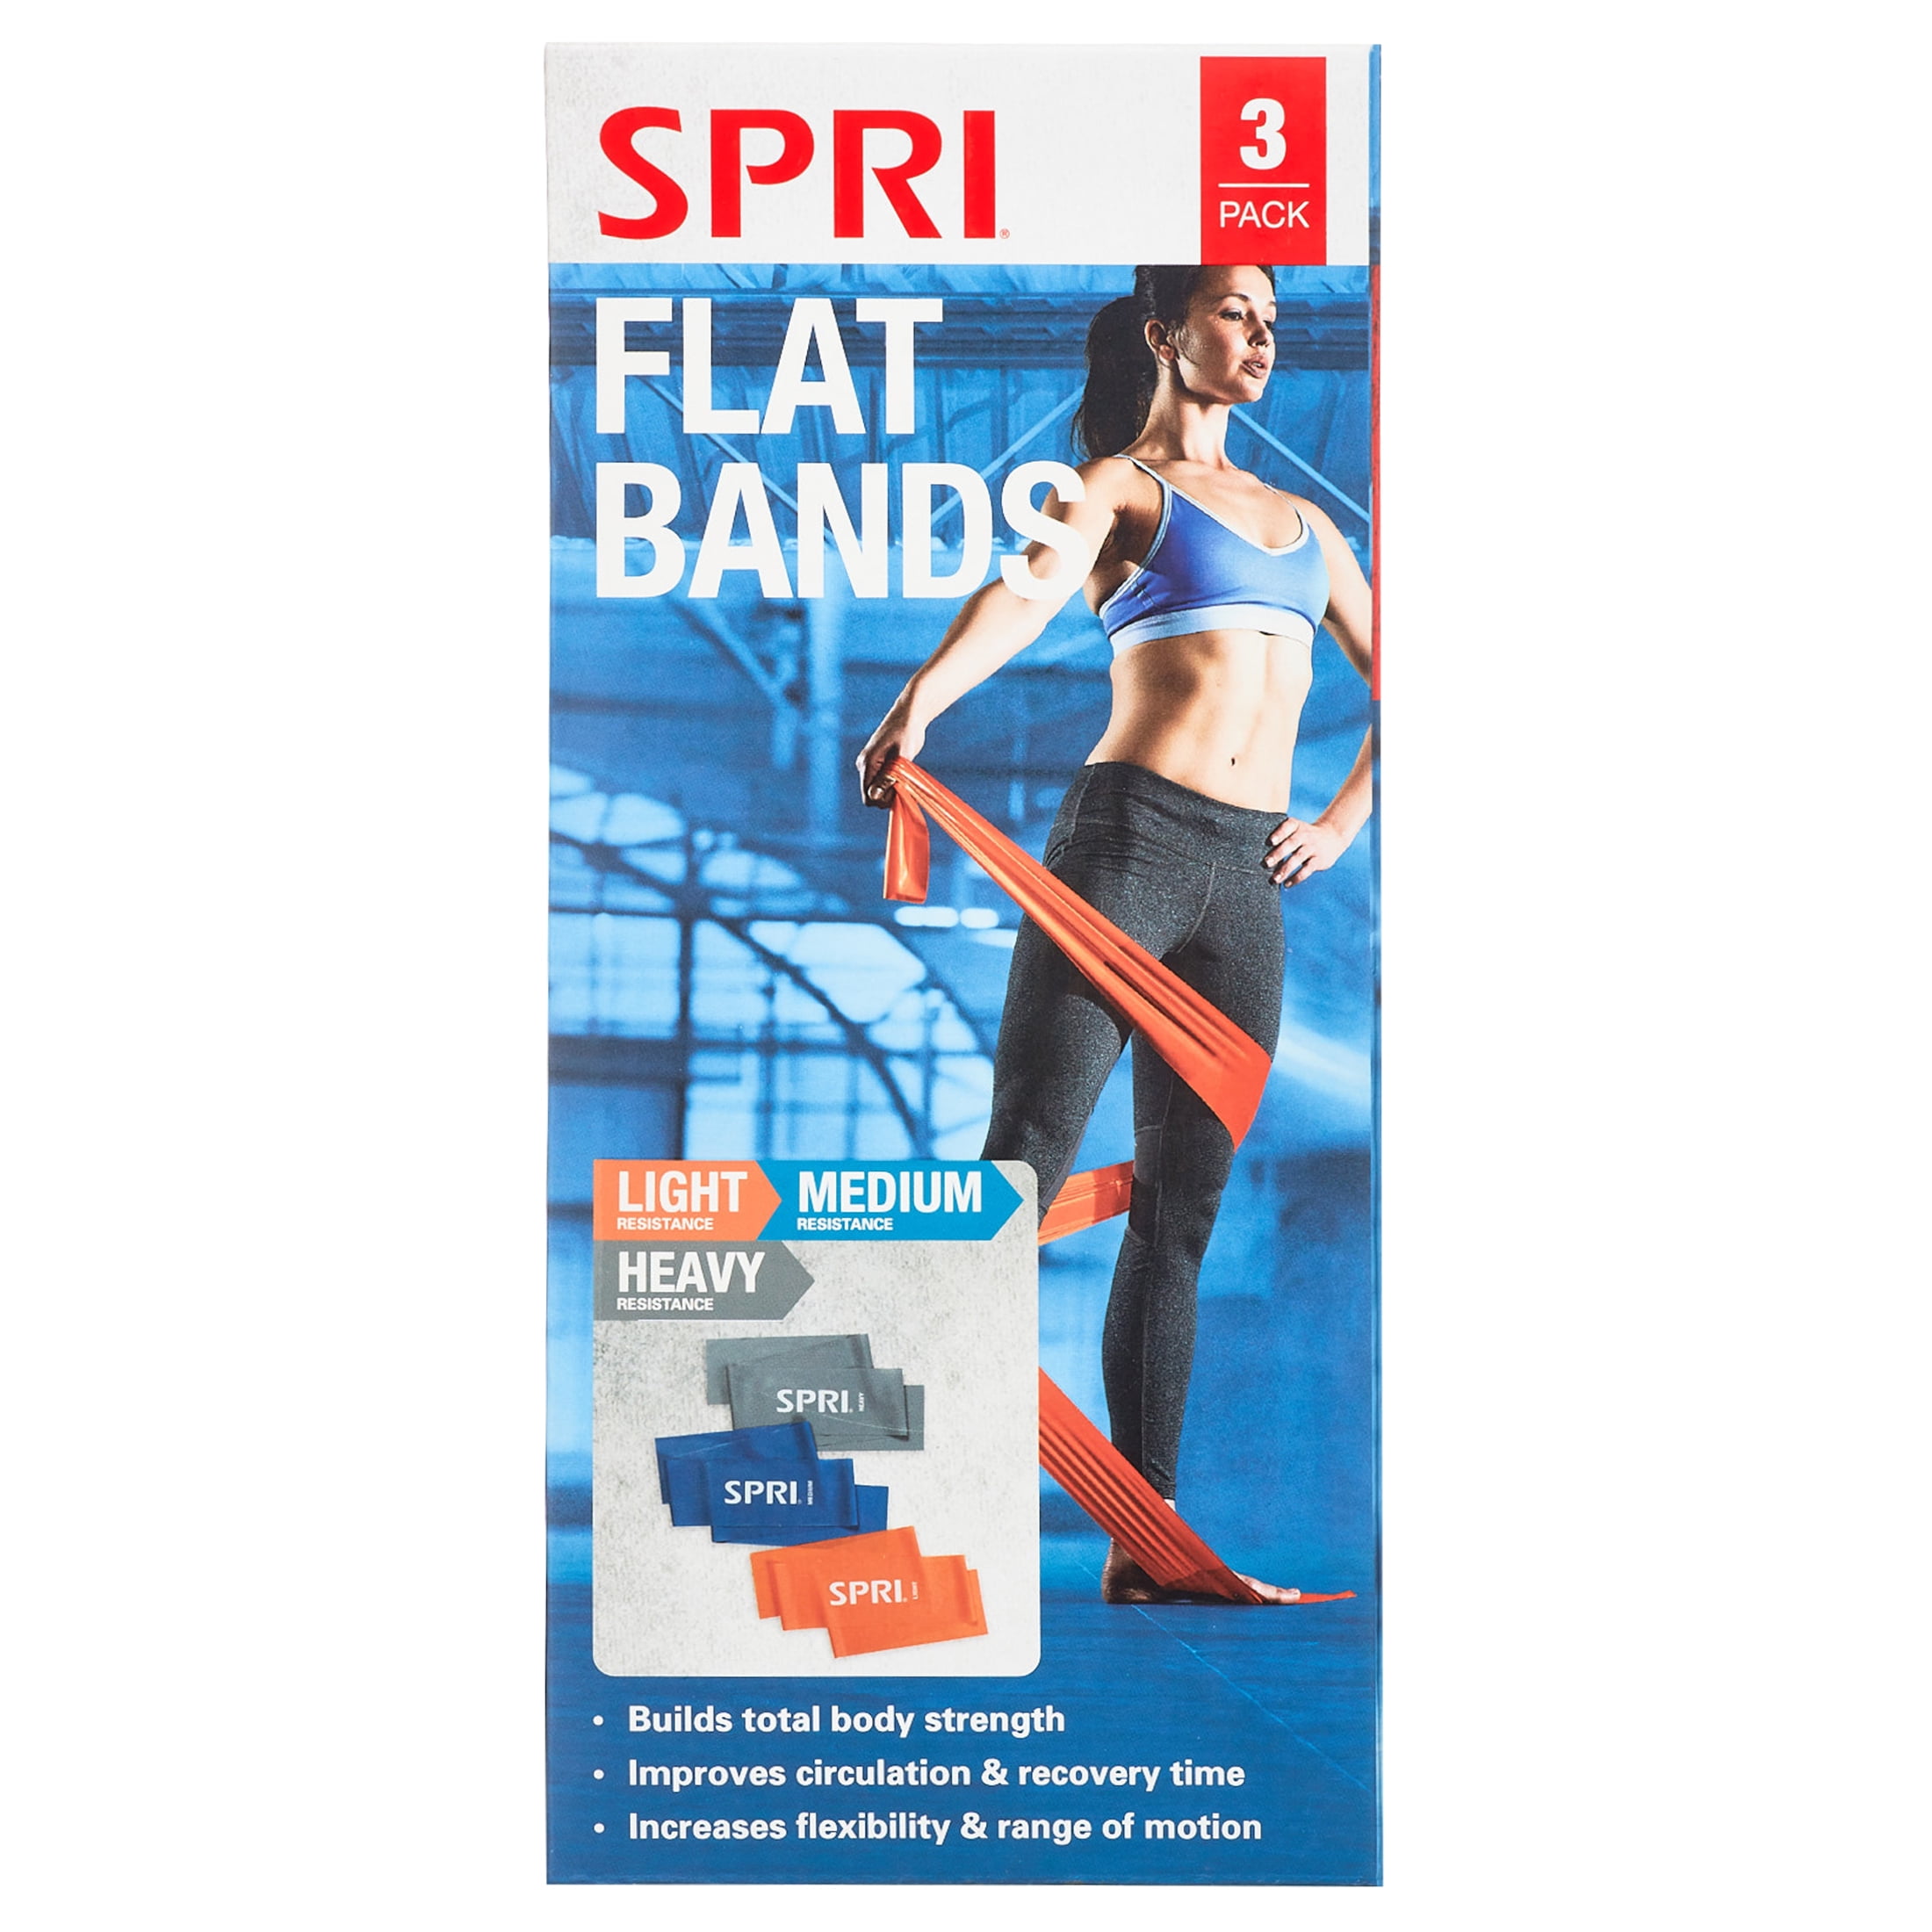  SPRI Standard Loop Bands 3-Pack - Resistance Band Kit